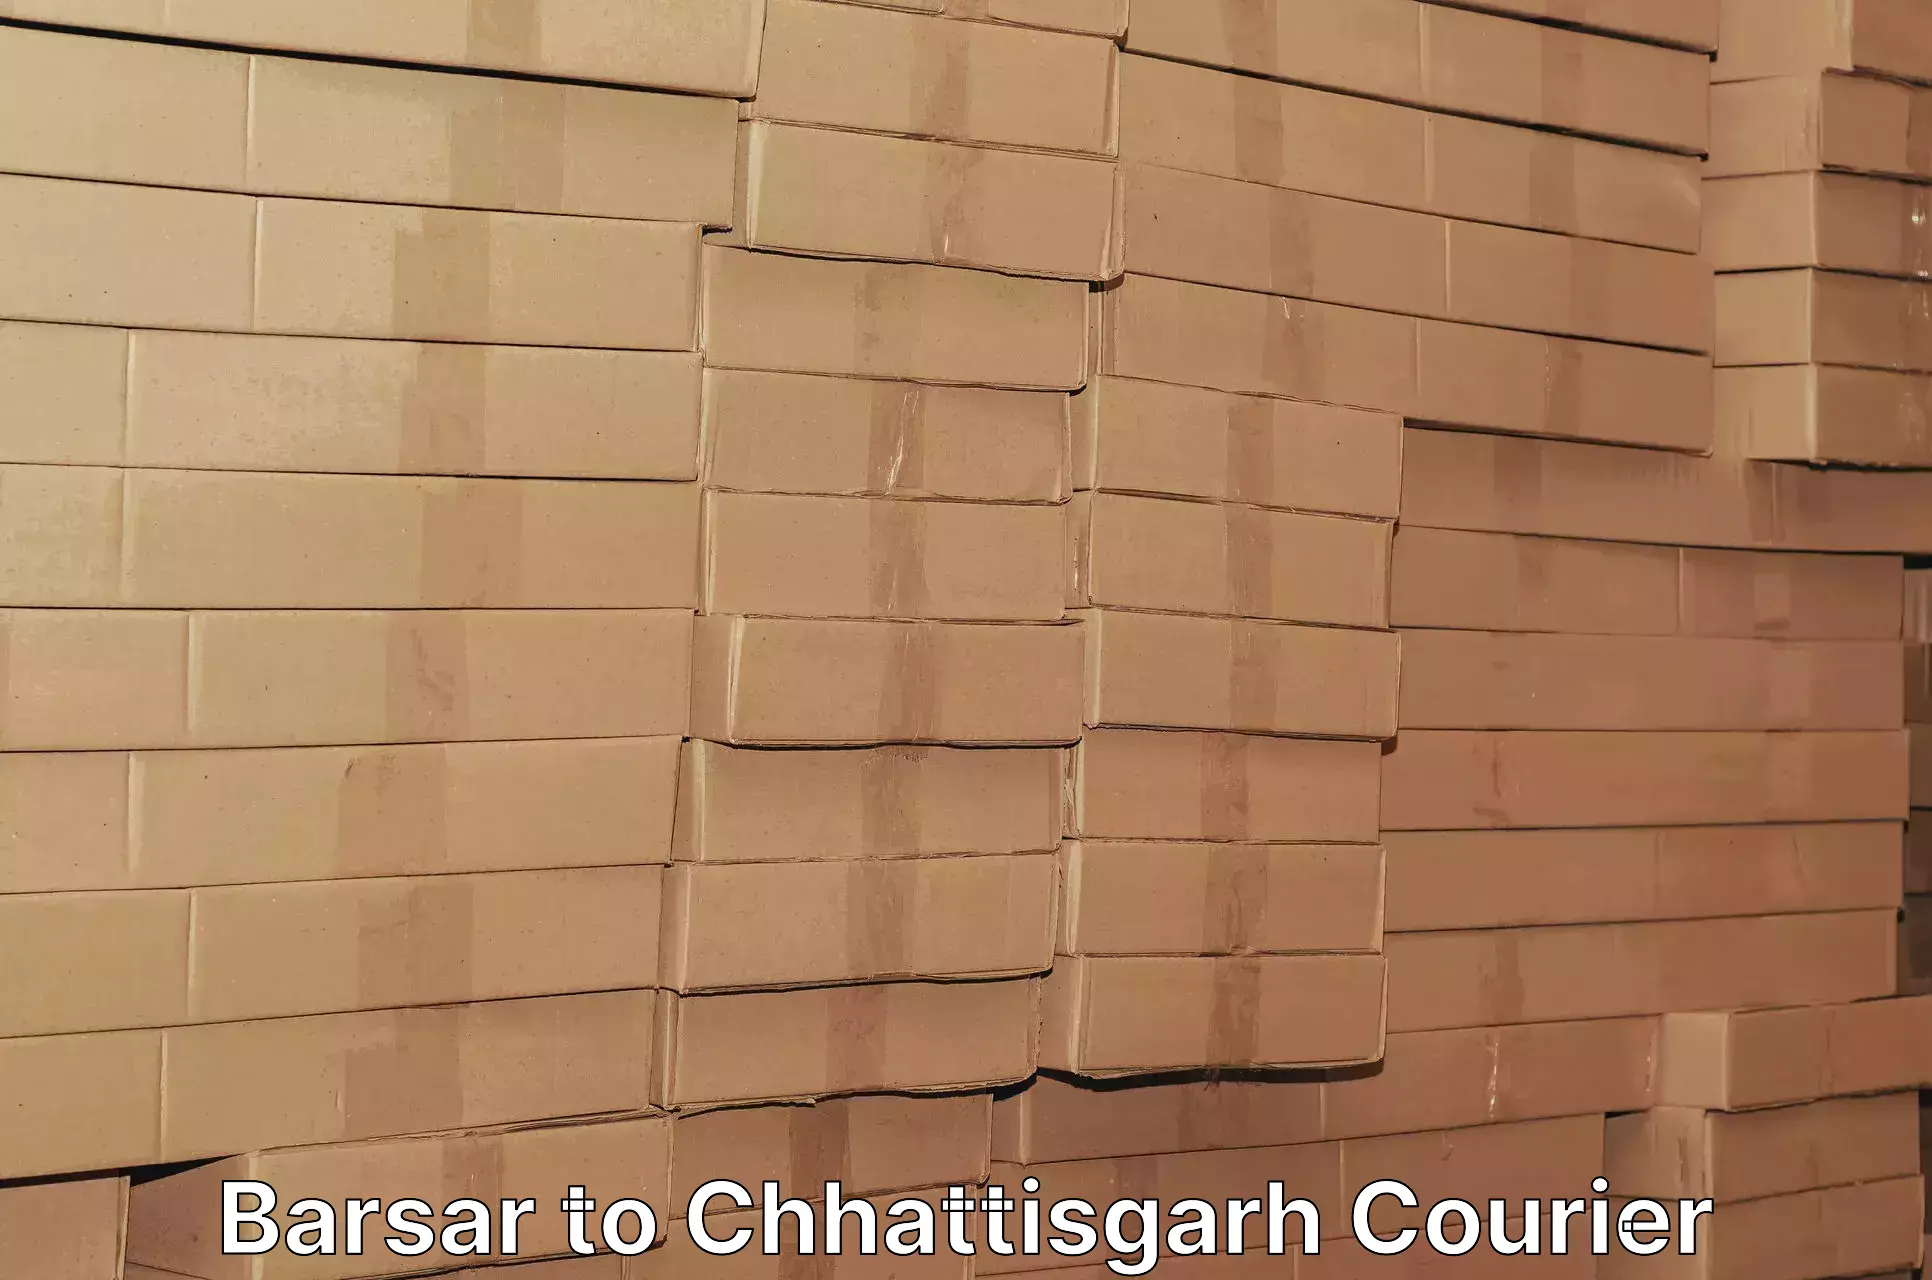 Package delivery network Barsar to Korea Chhattisgarh